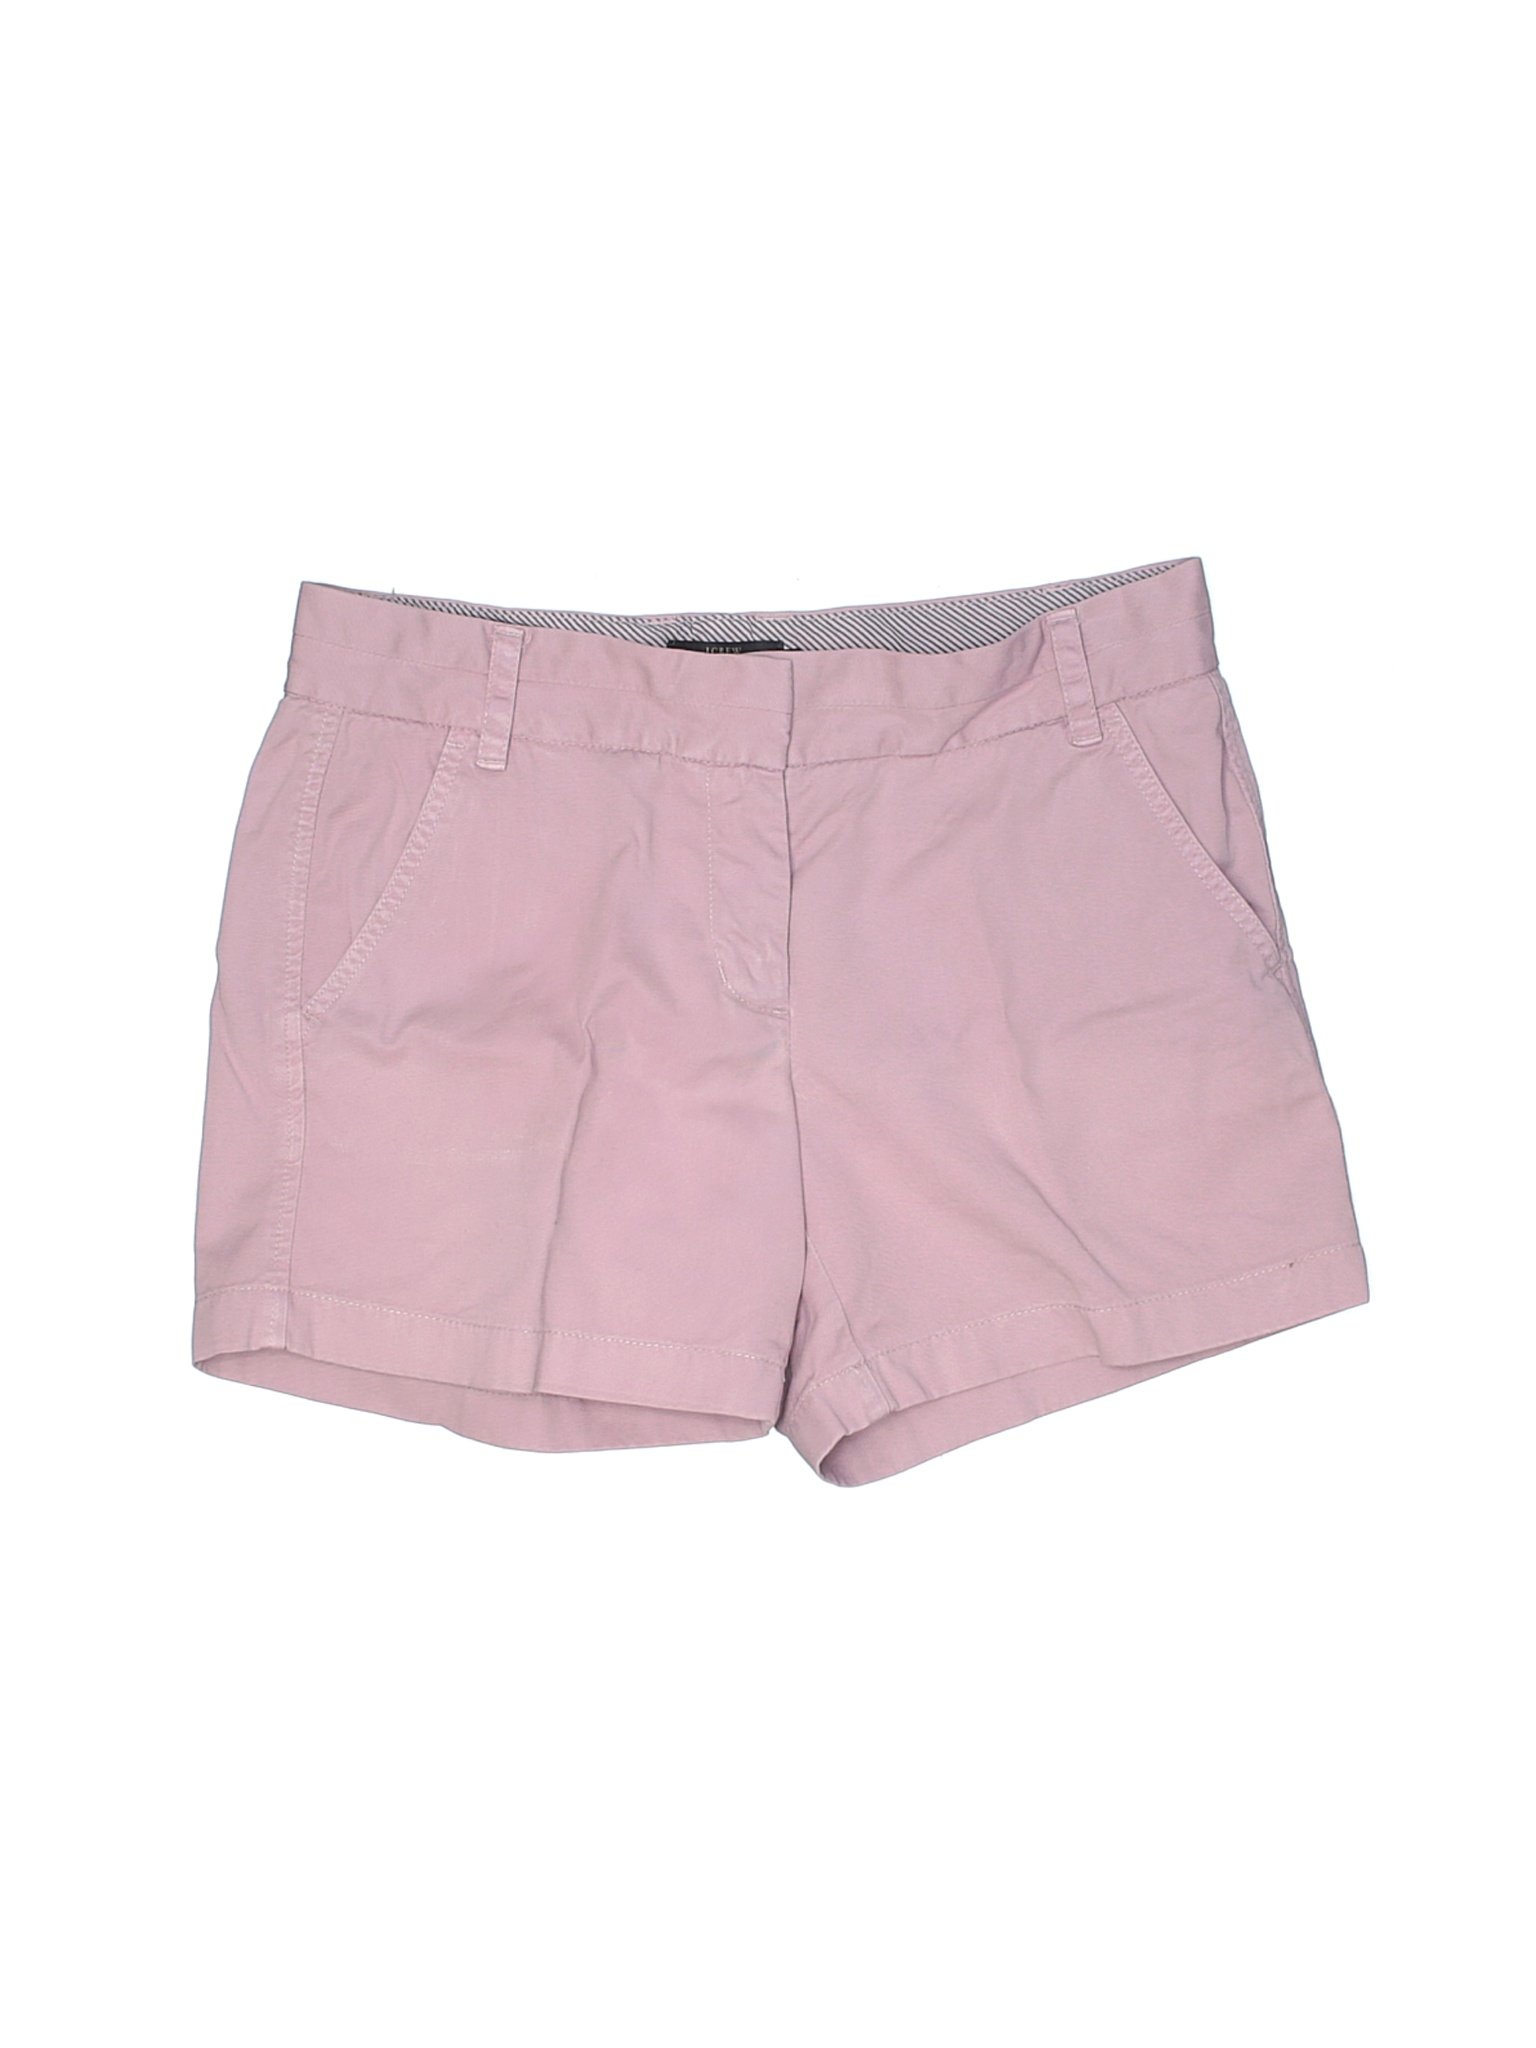 J.Crew Women Pink Khaki Shorts 4 | eBay